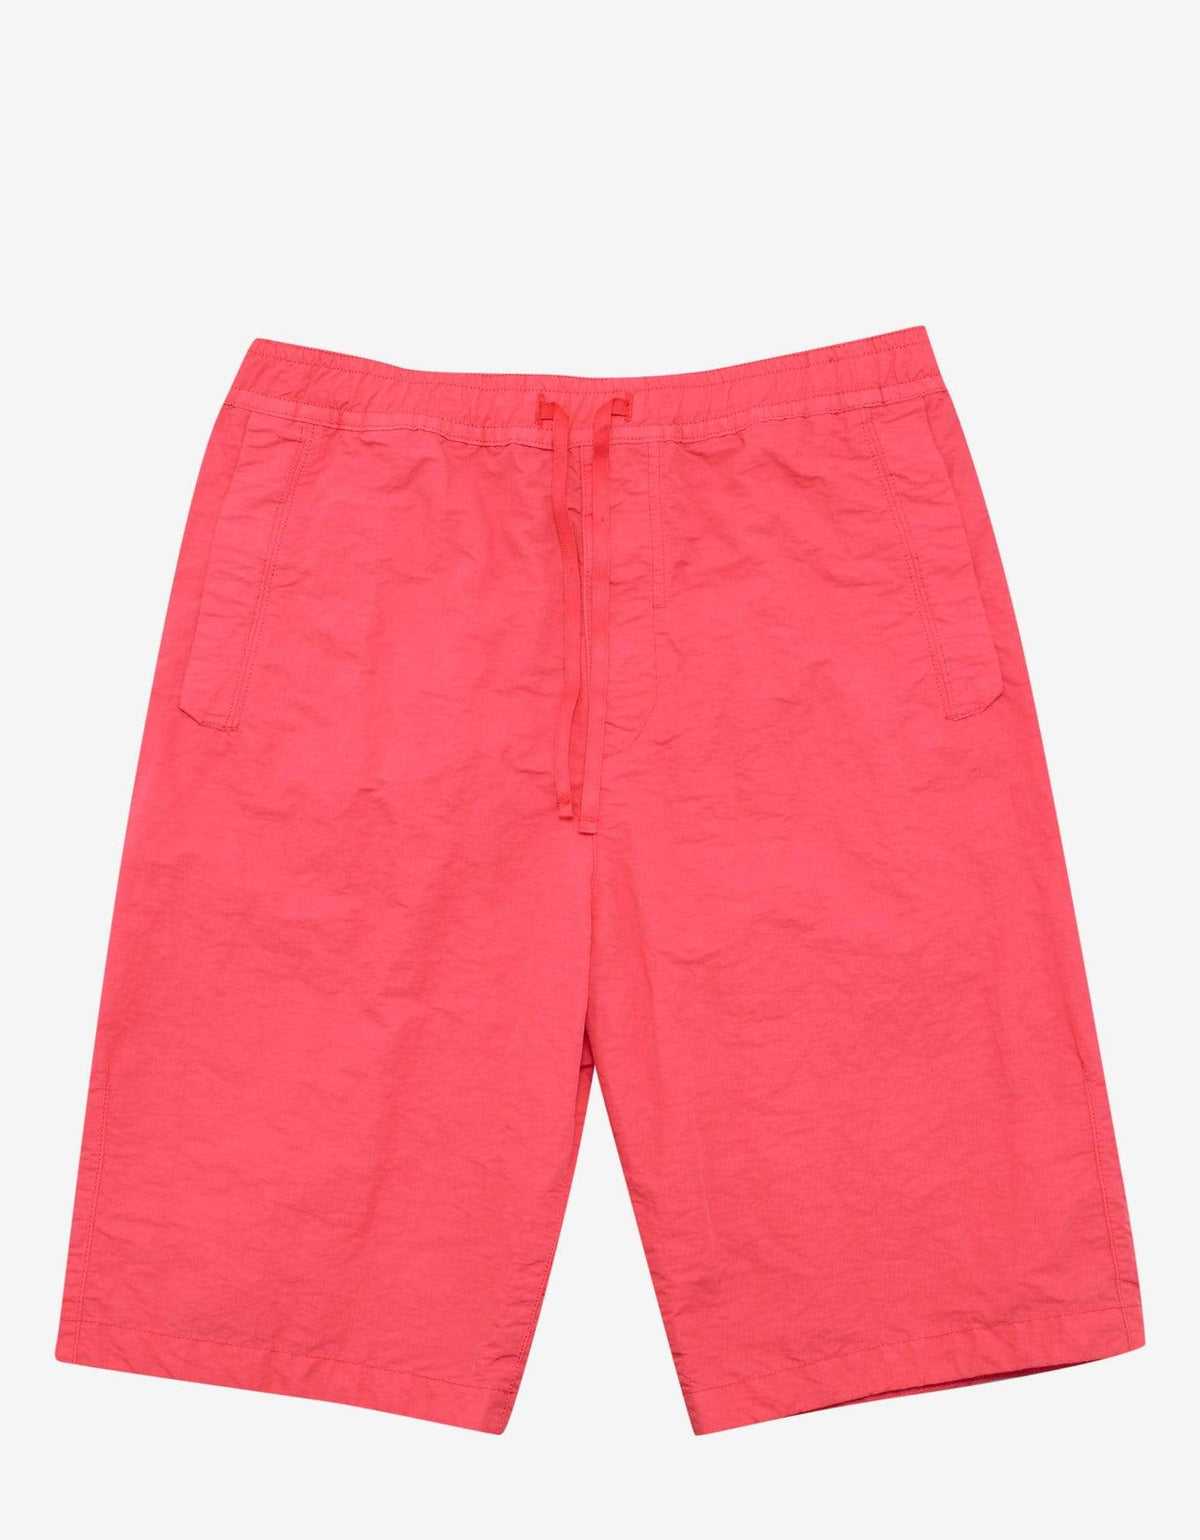 Stone Island Shadow Project Pink Nylon Shorts